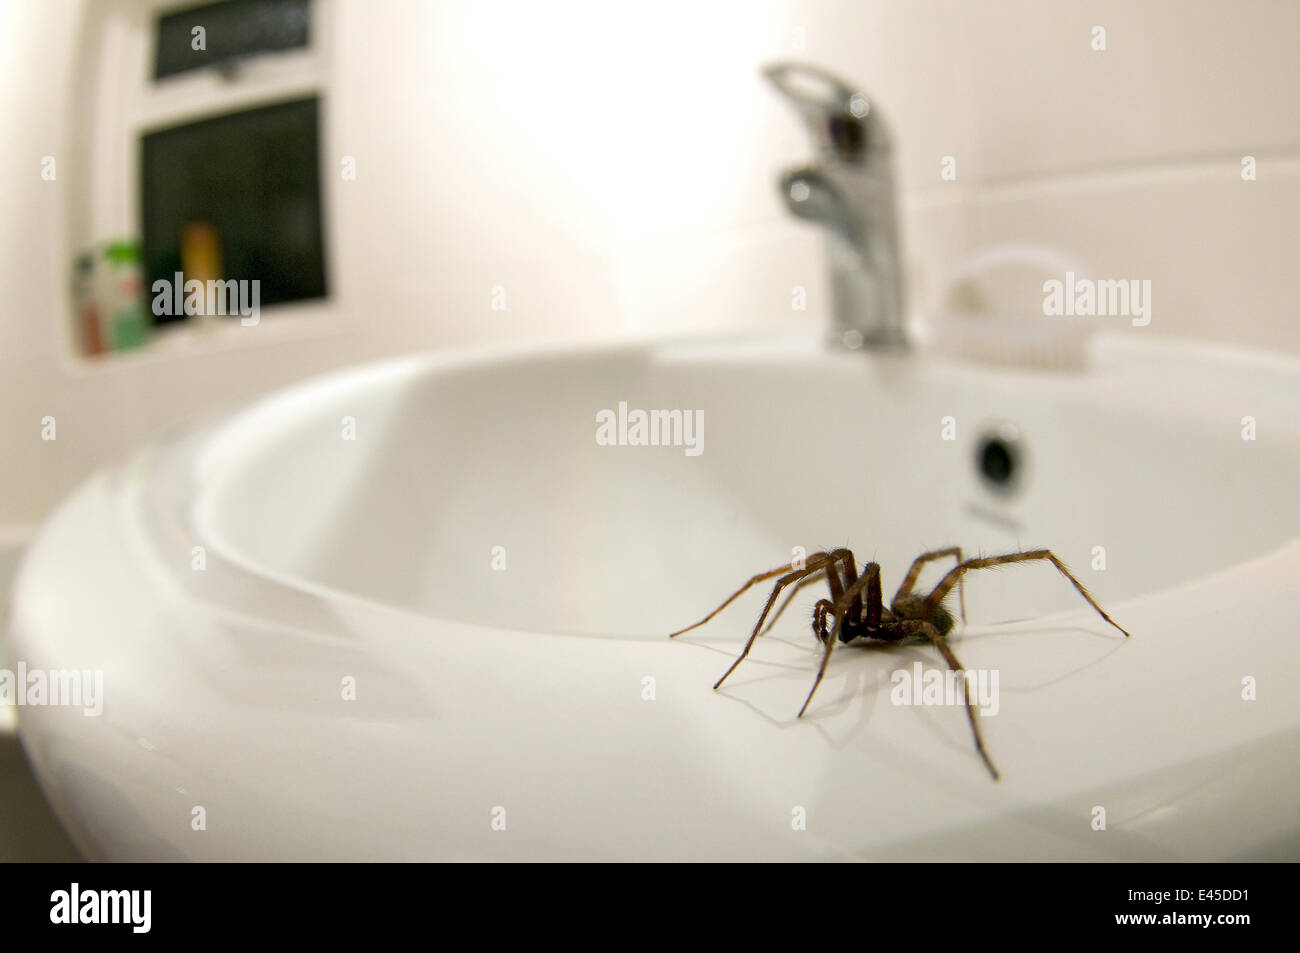 House spider (Tegenaria gigantea) on edge of sink in house, Hertfordshire, England Stock Photo